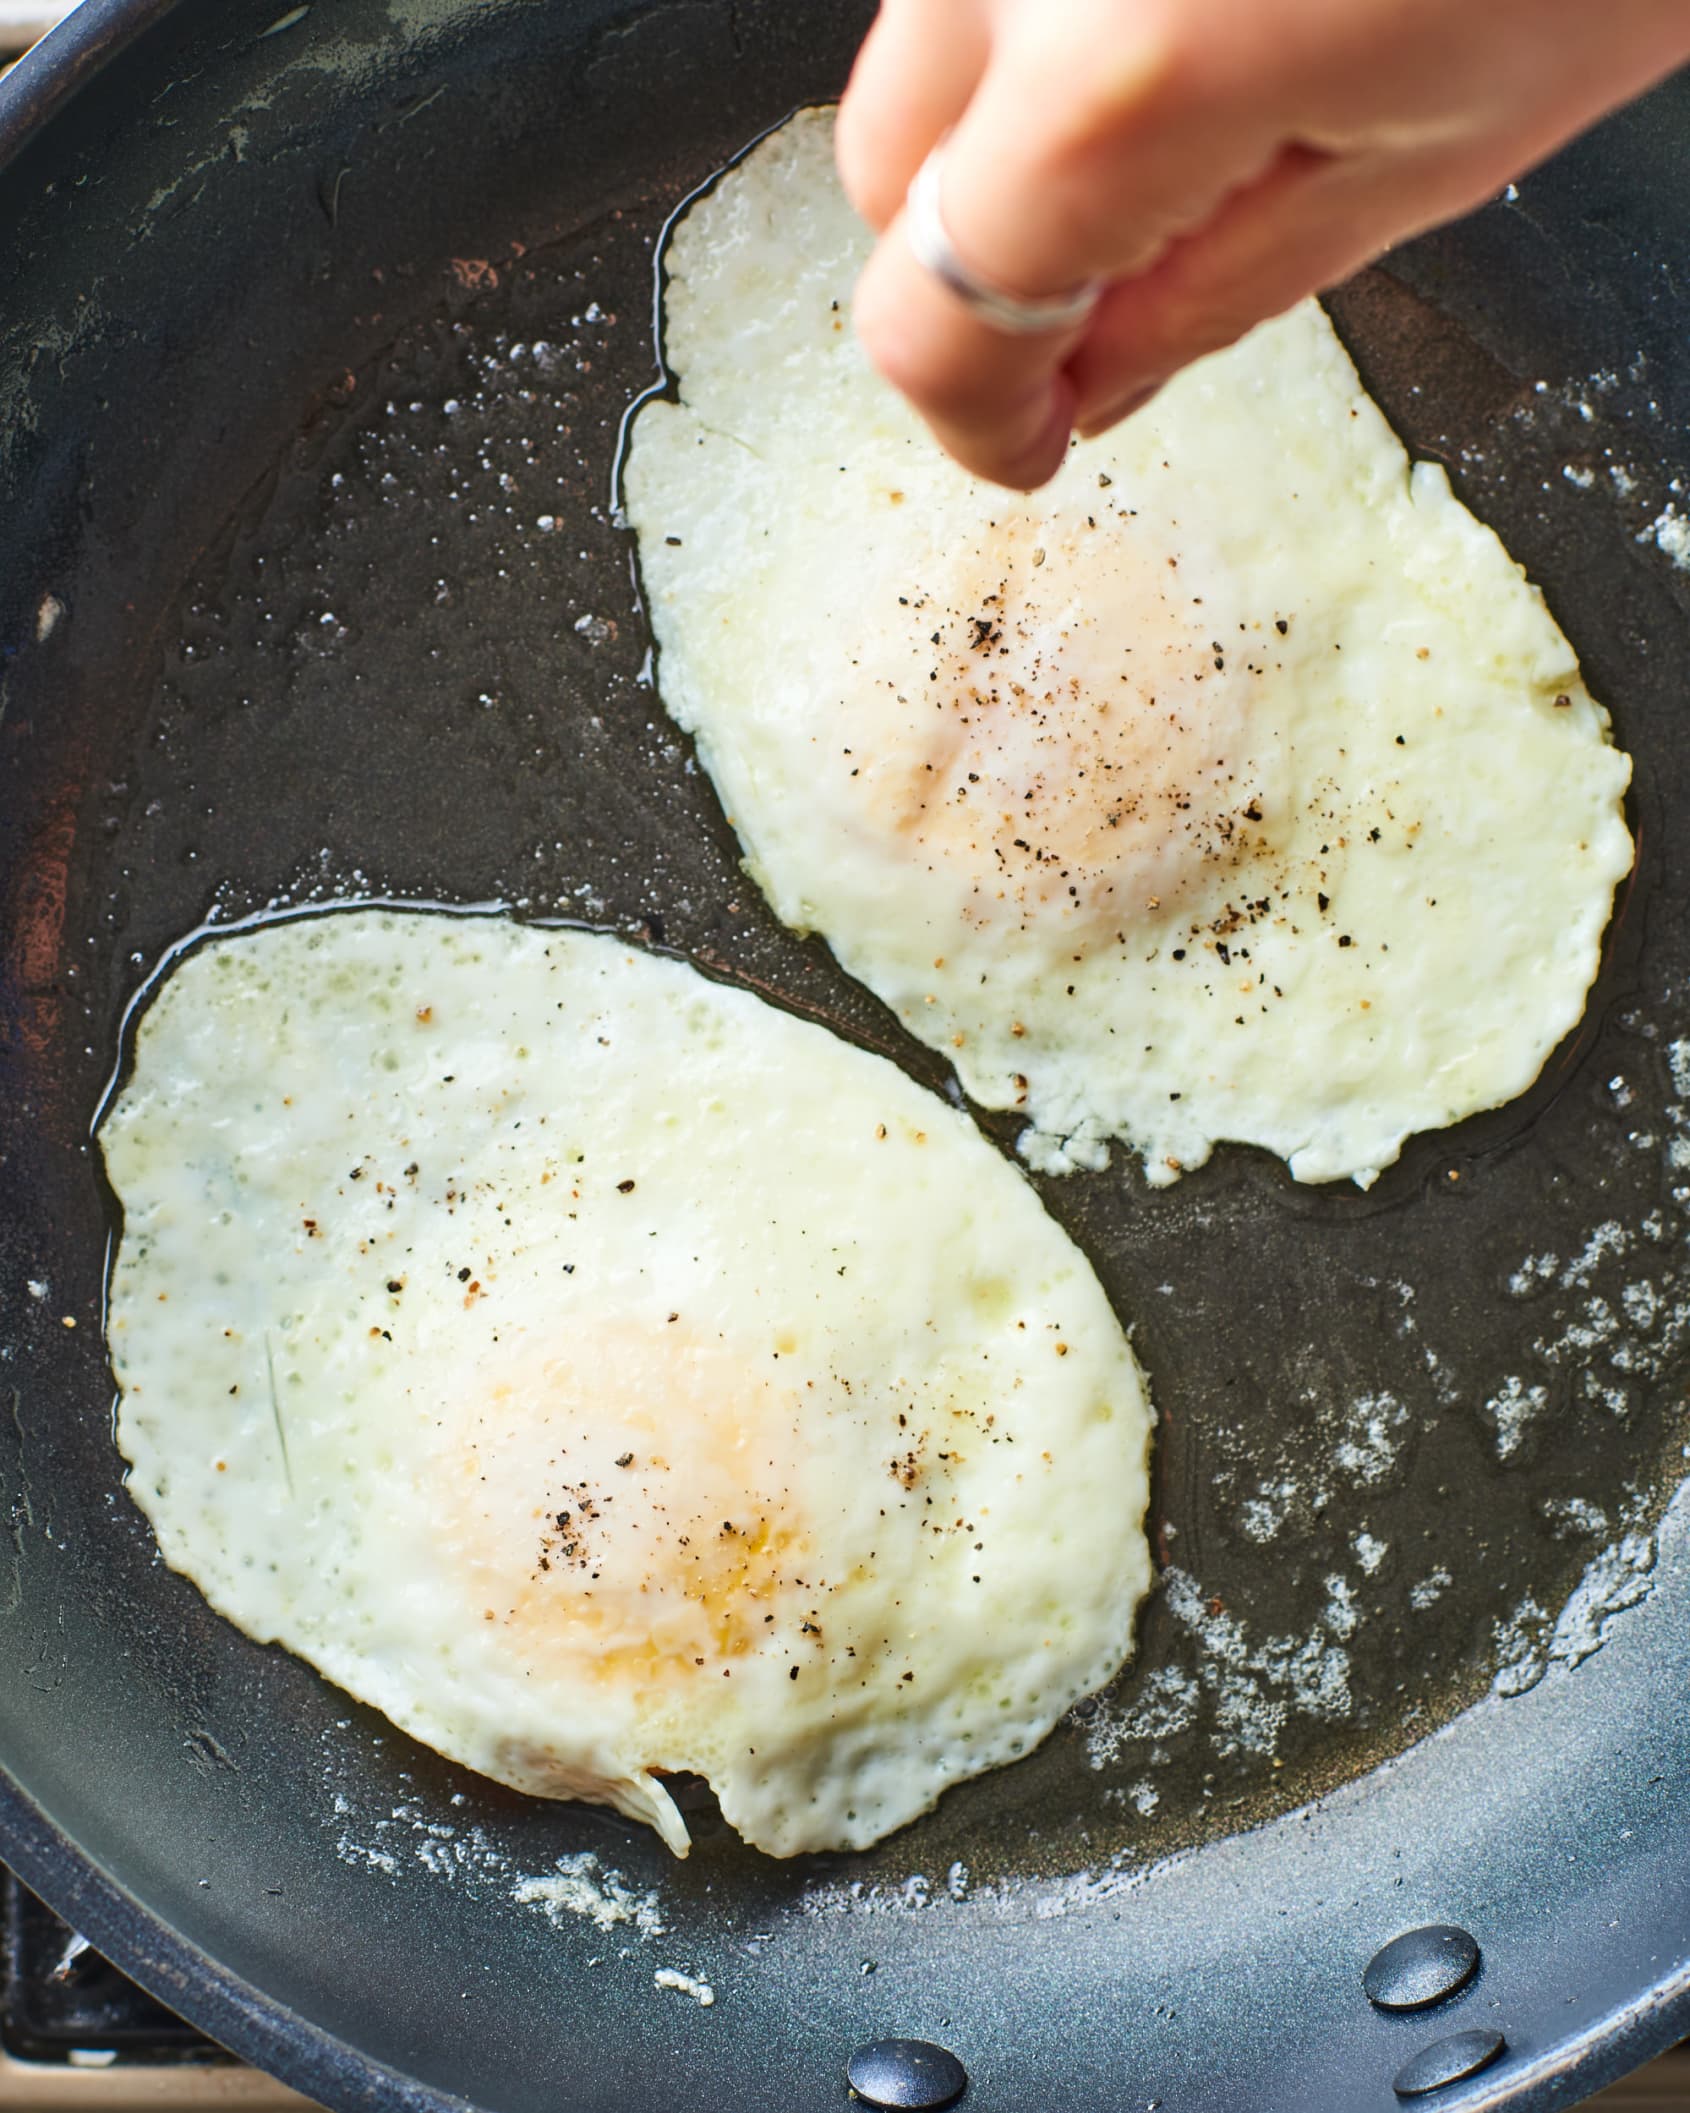 The Best Single-Egg Frying Pan